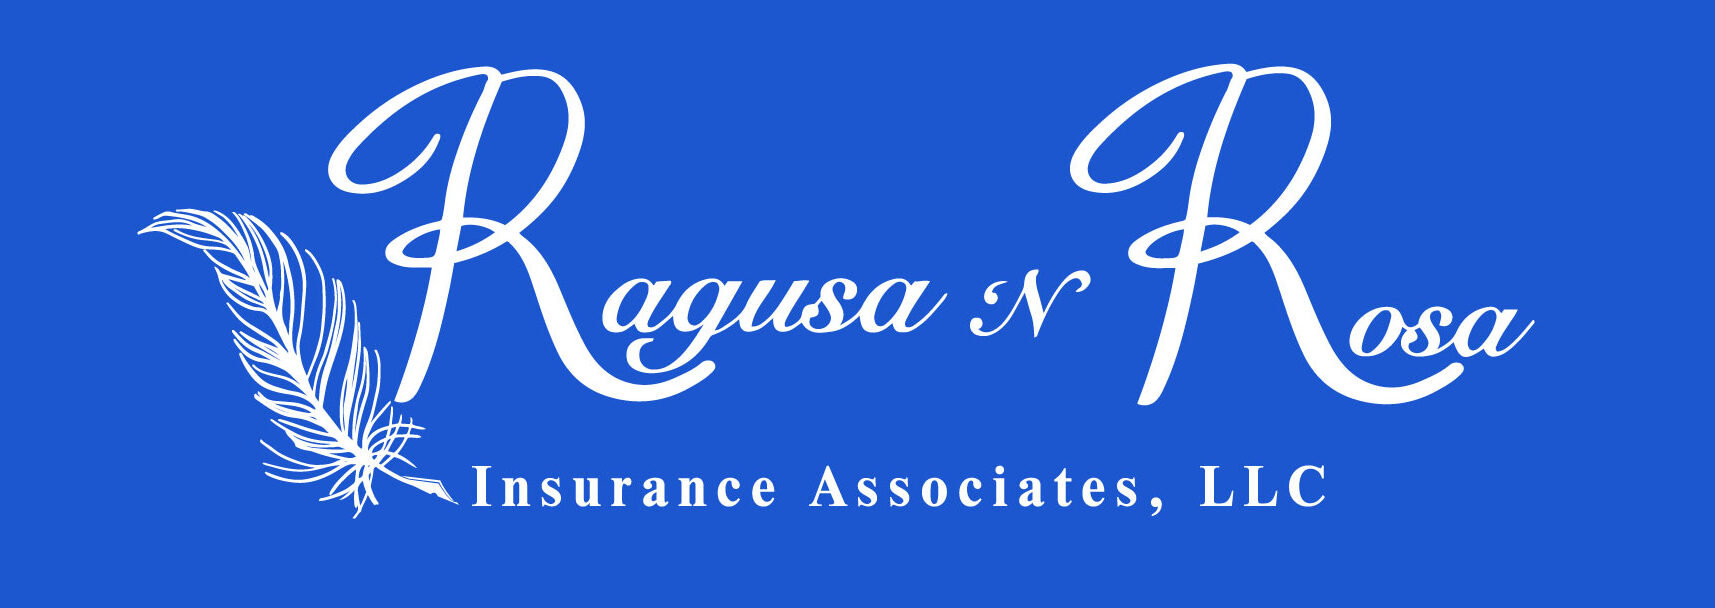 Ragusa -N- Rosa Insurance Associates, LLC  Logo